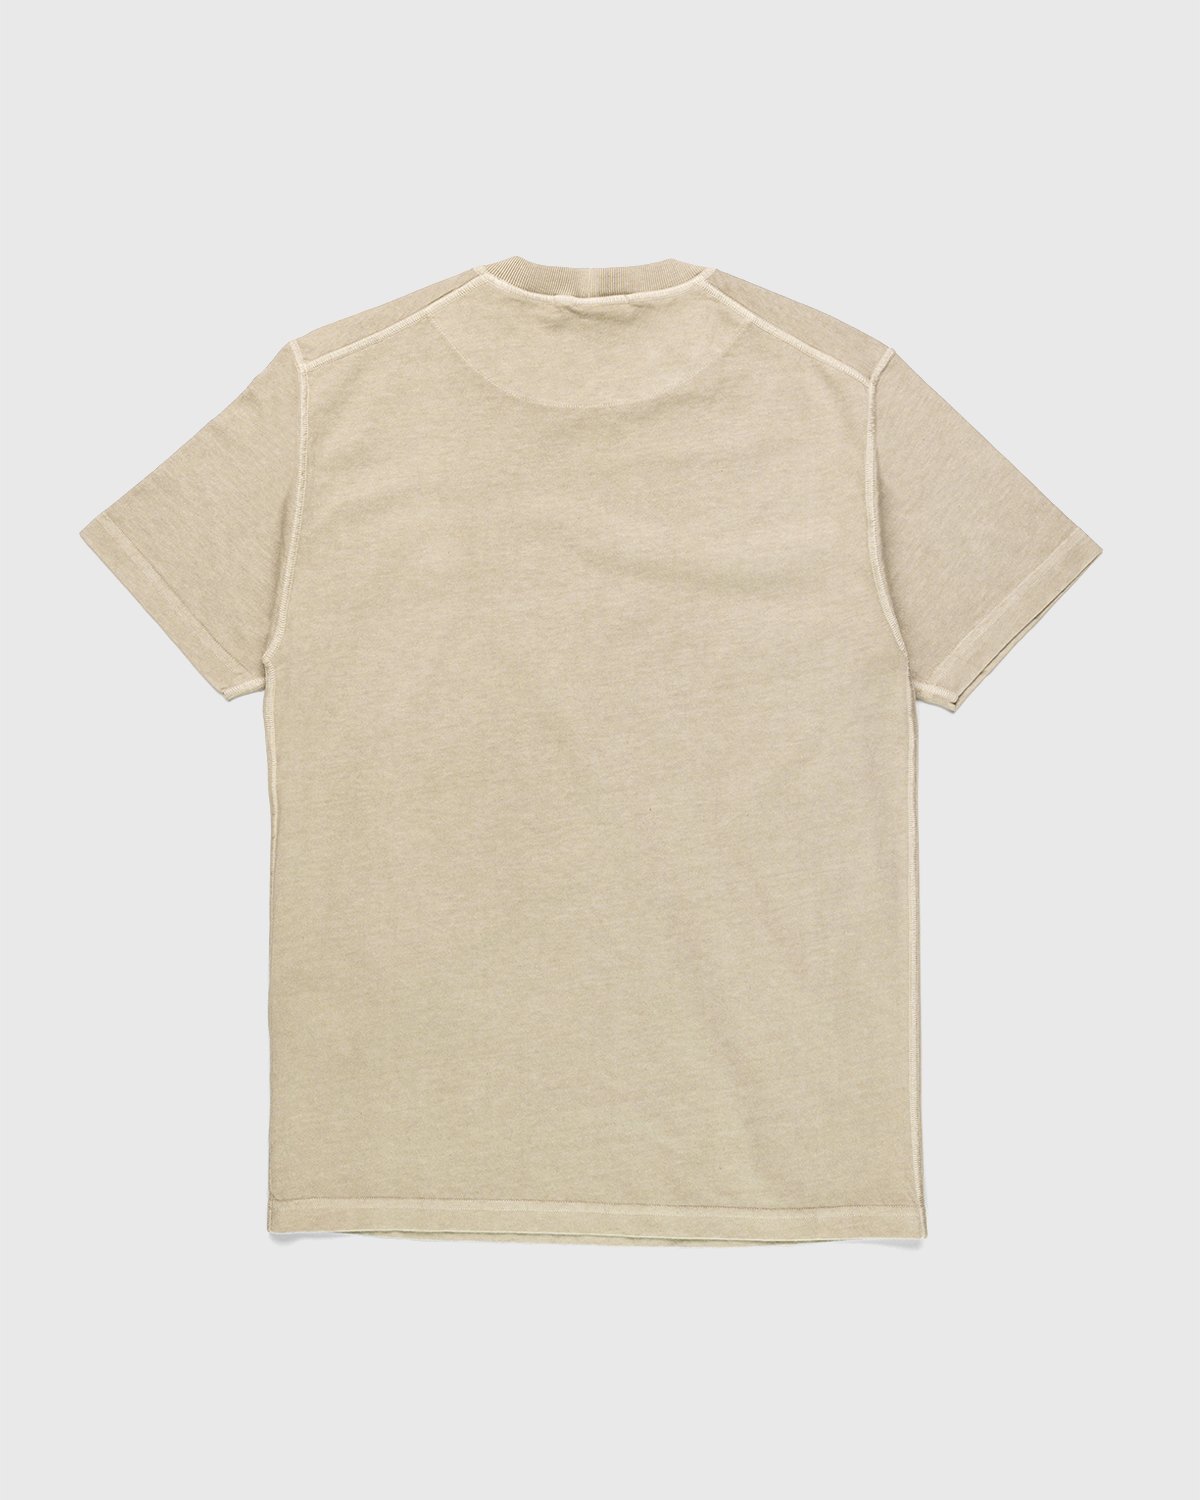 Stone Island - T-Shirt Natural Beige - Clothing - Beige - Image 2